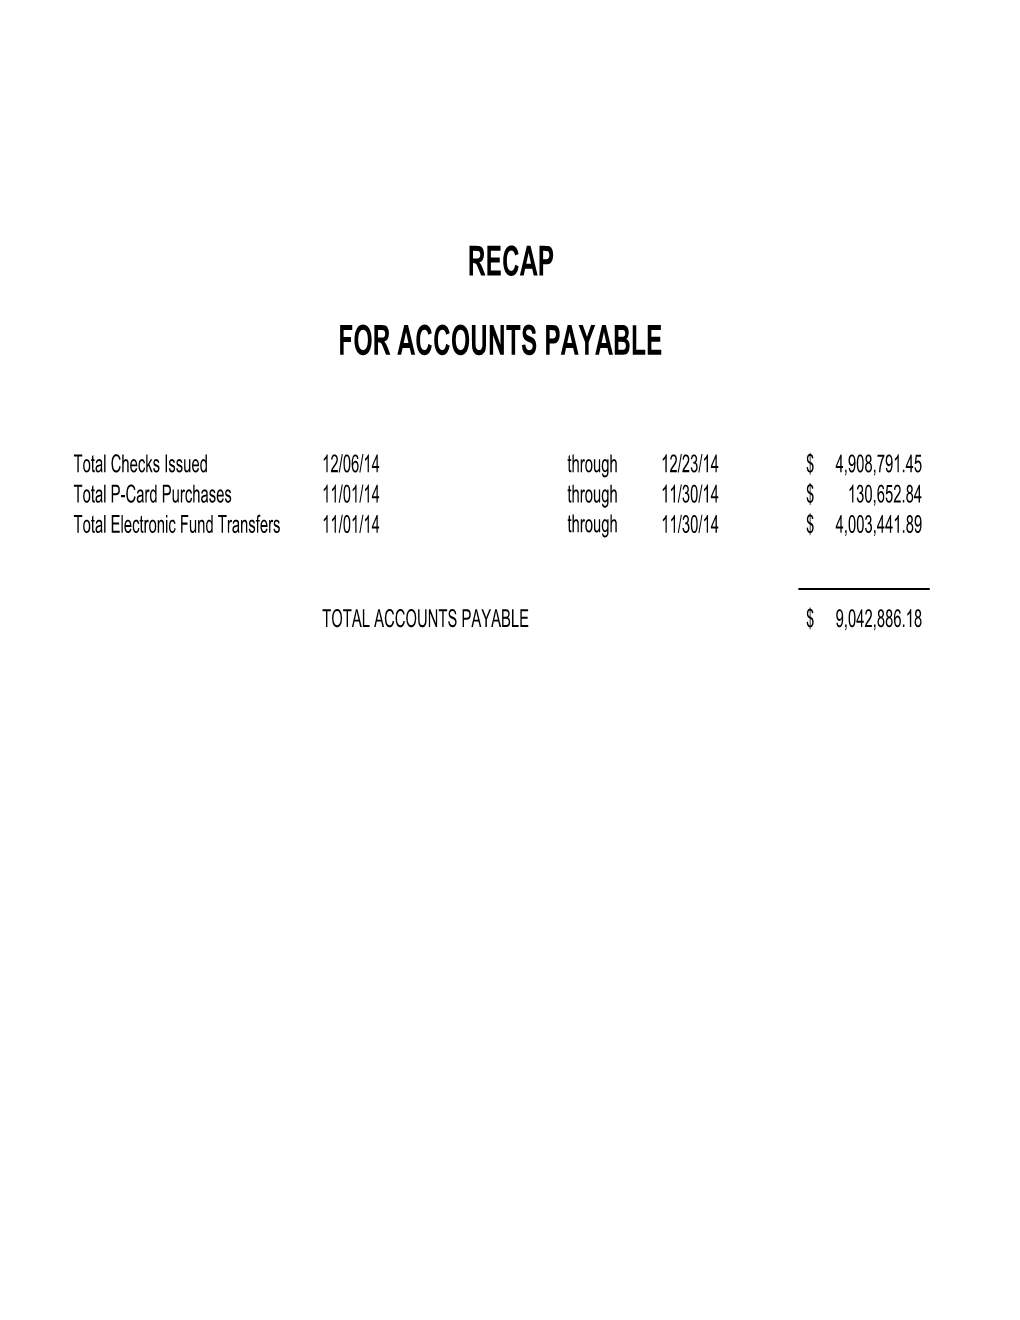 Recap for Accounts Payable